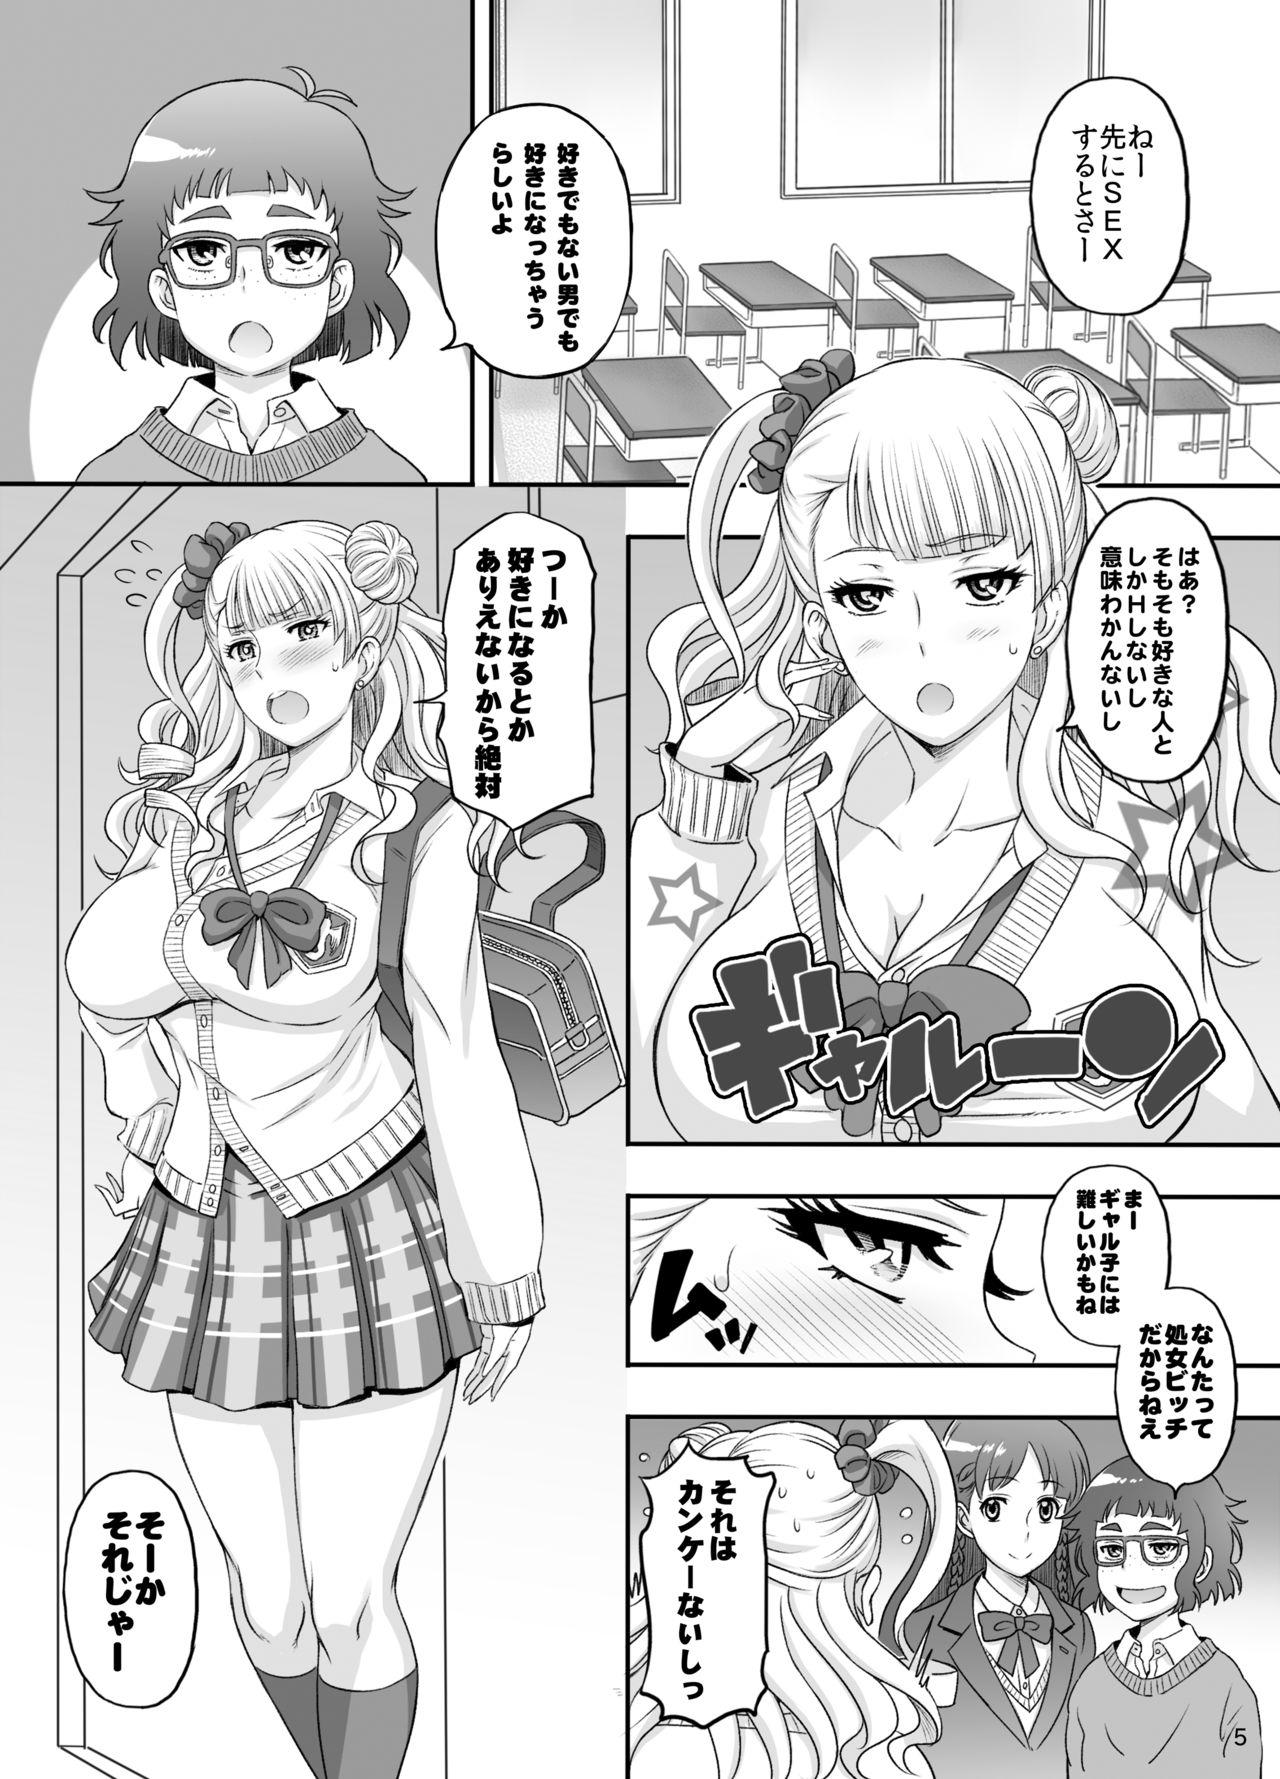 Tittyfuck ○○○ shite! Galko-chan - Oshiete galko-chan Roughsex - Page 4